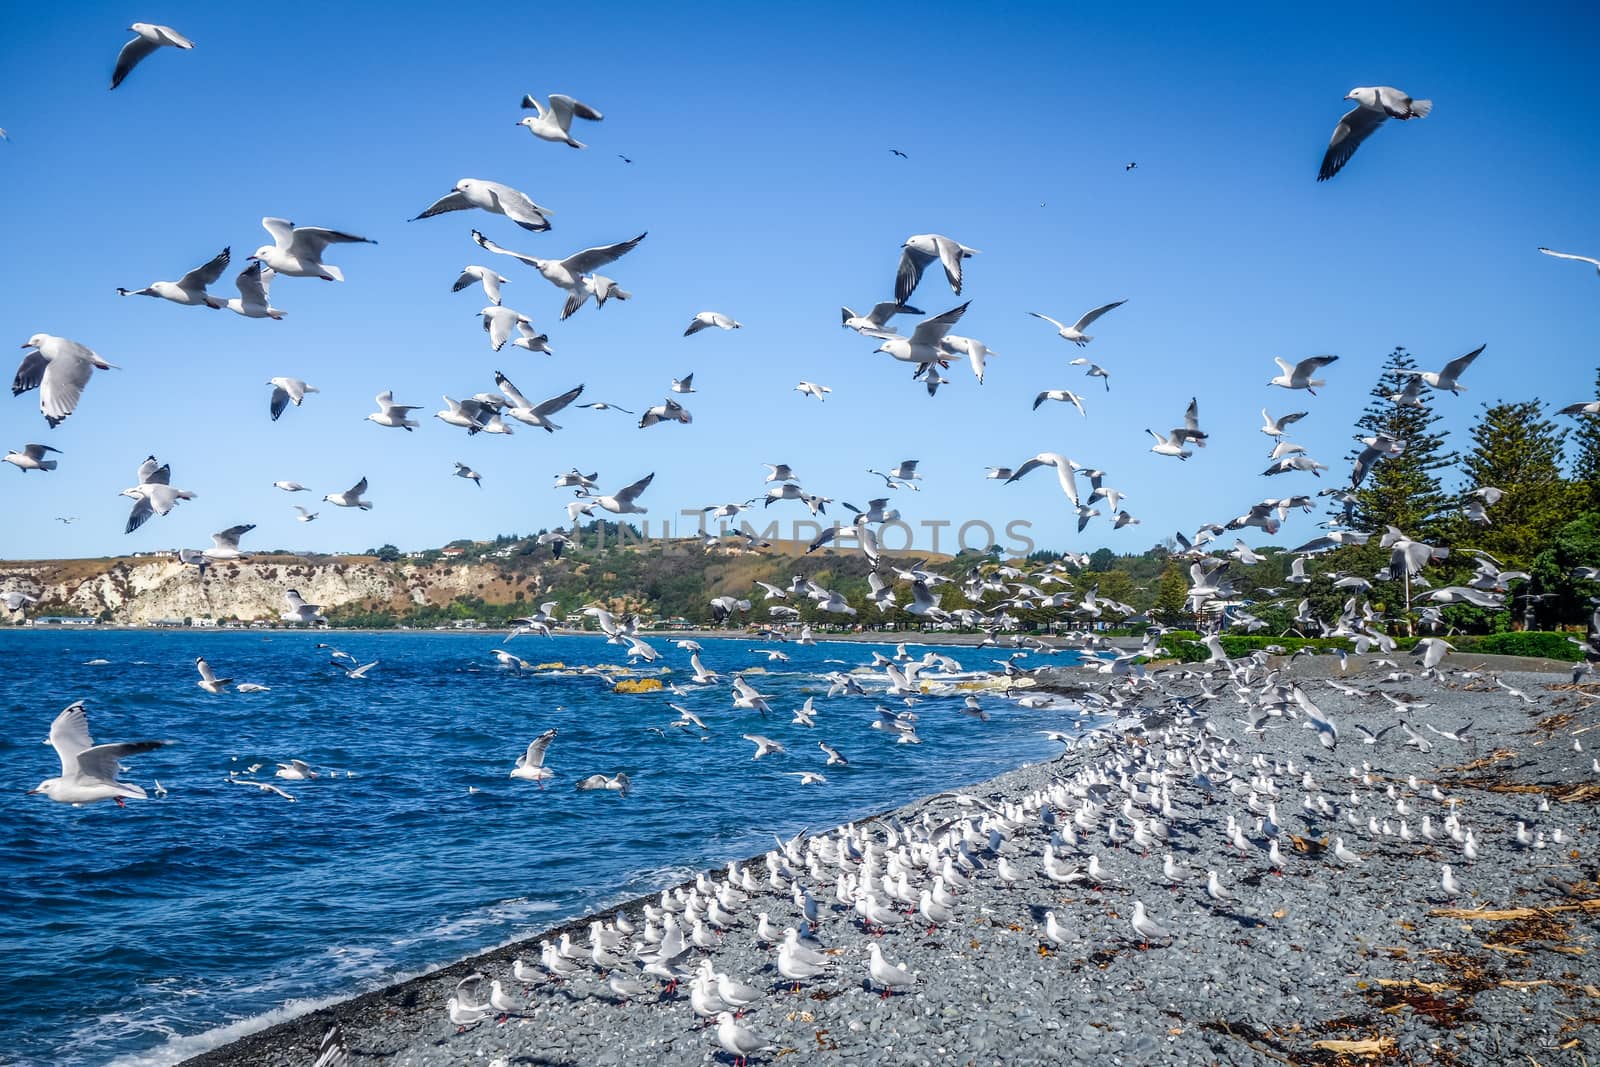 Seagulls on Kaikoura beach, New Zealand by daboost